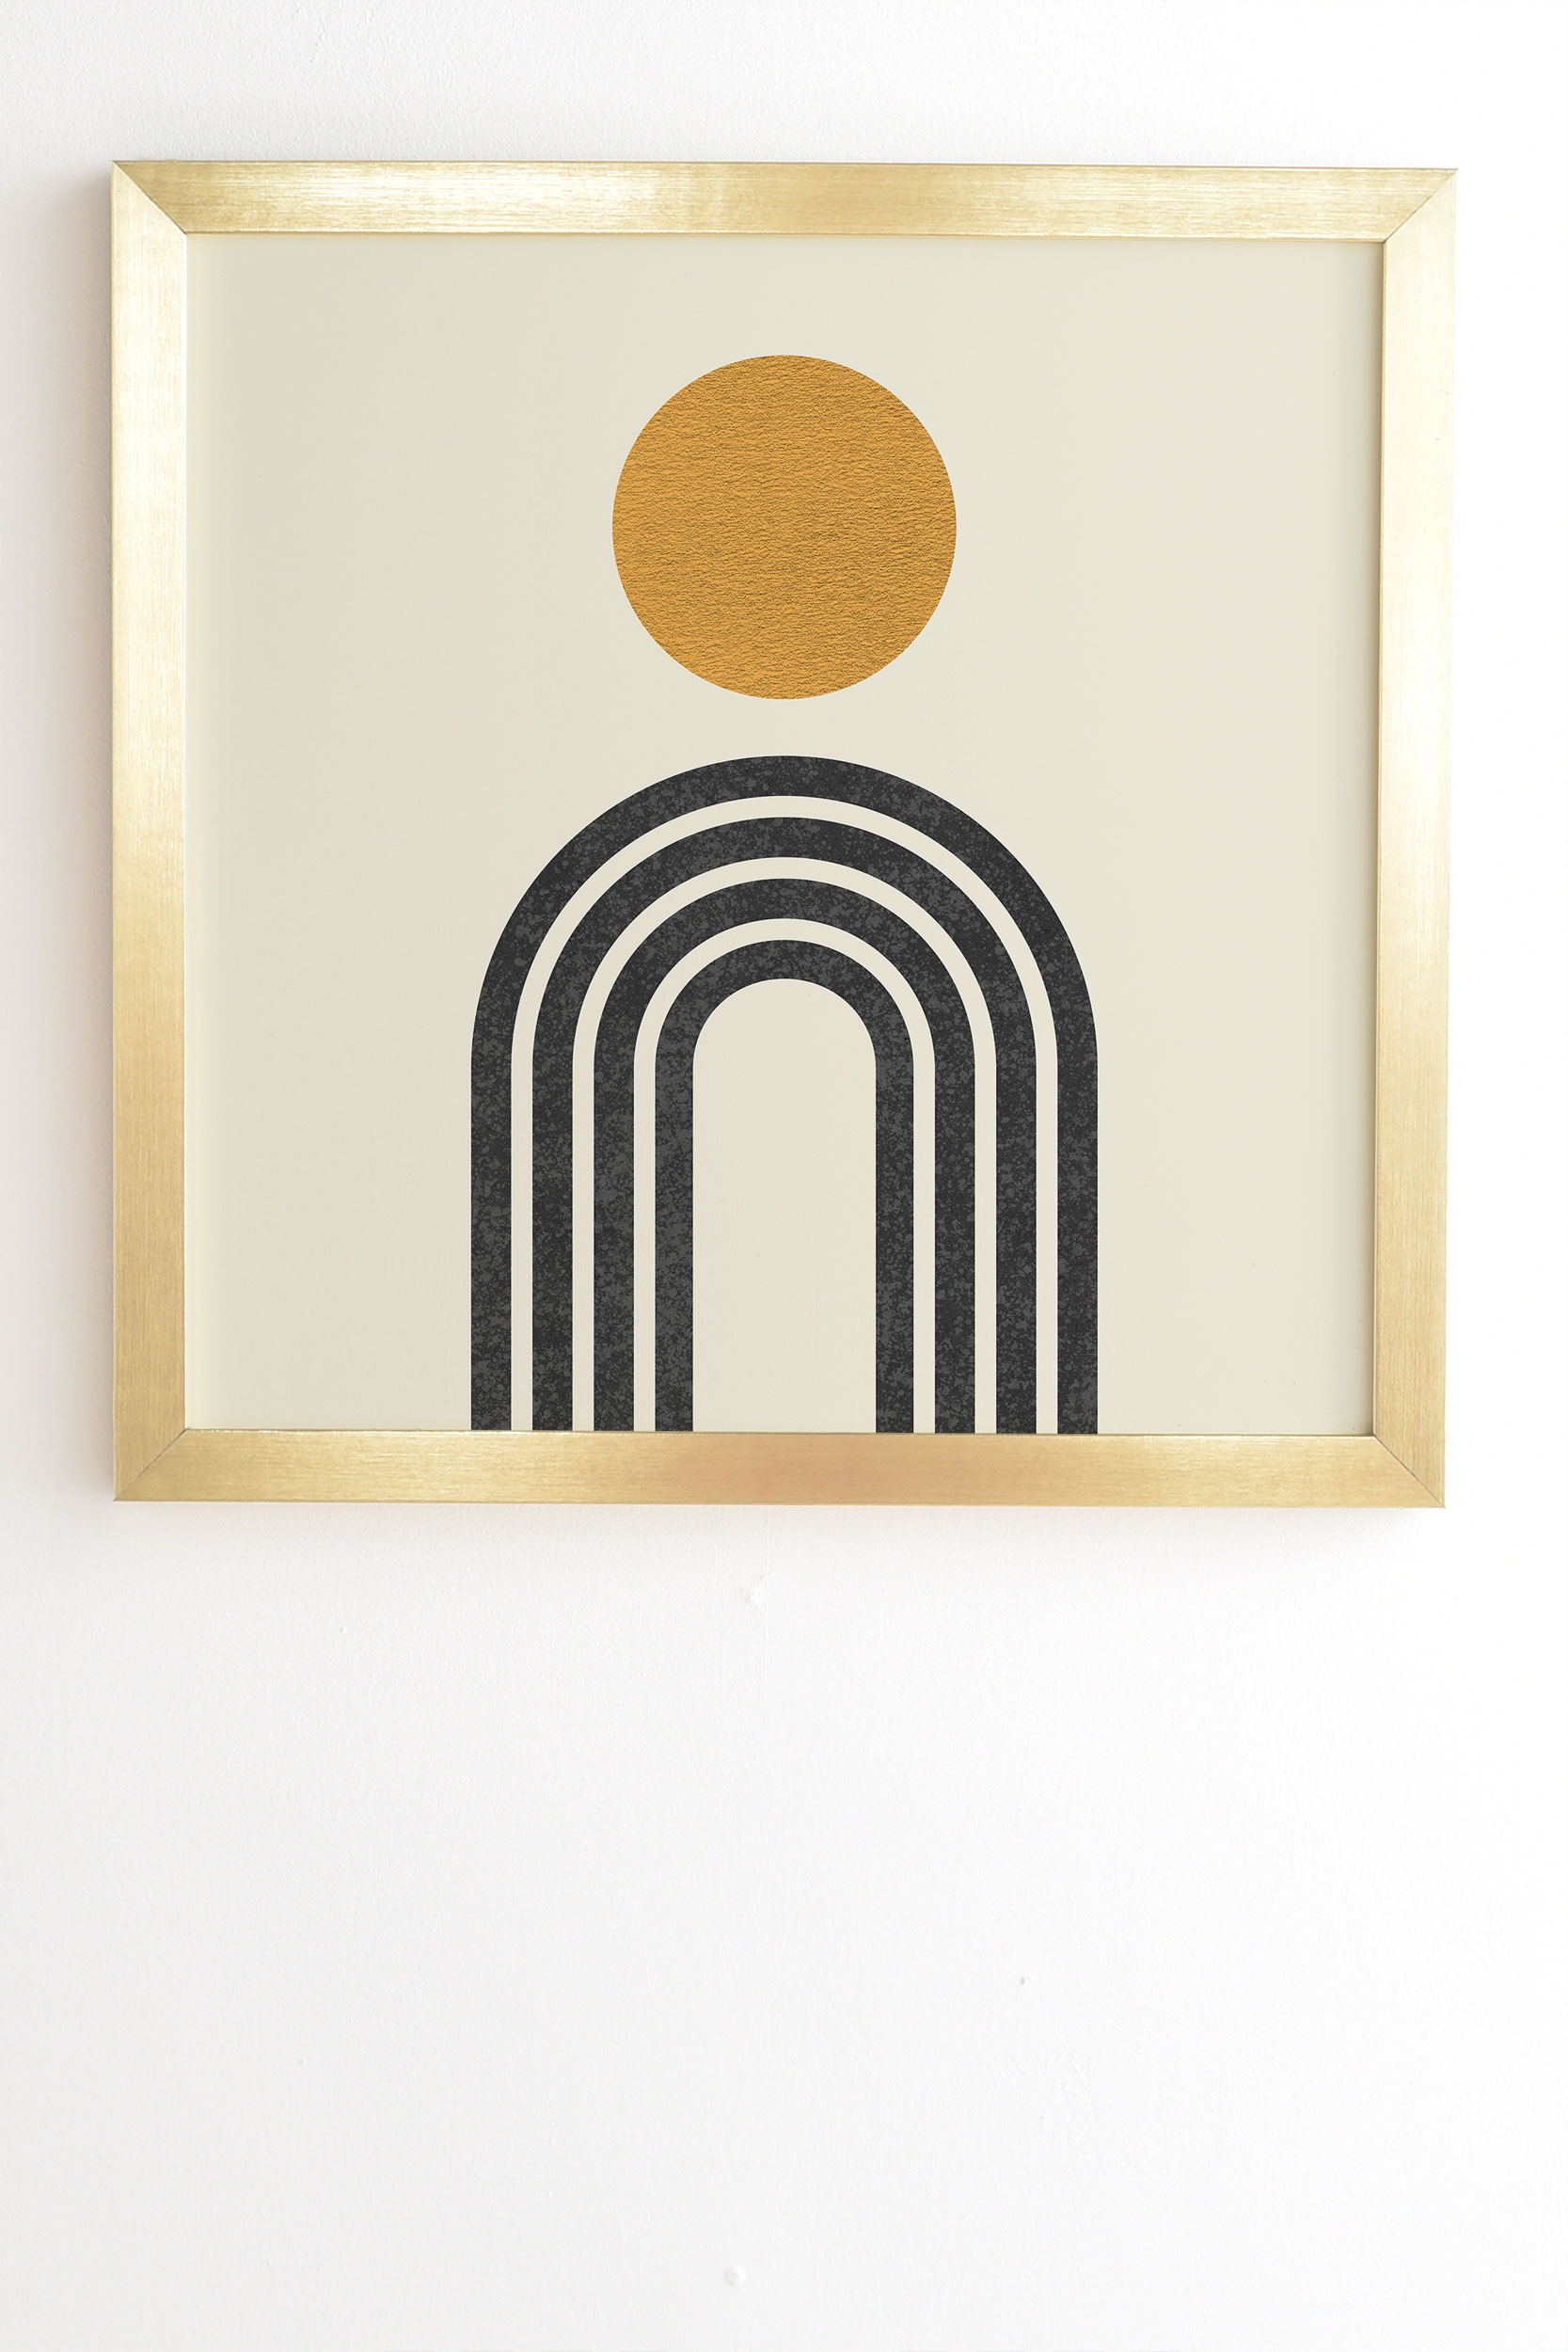 Mid Century Modern Gold Sun by MoonlightPrint - Framed Wall Art Basic Gold 11" x 13" - Image 1